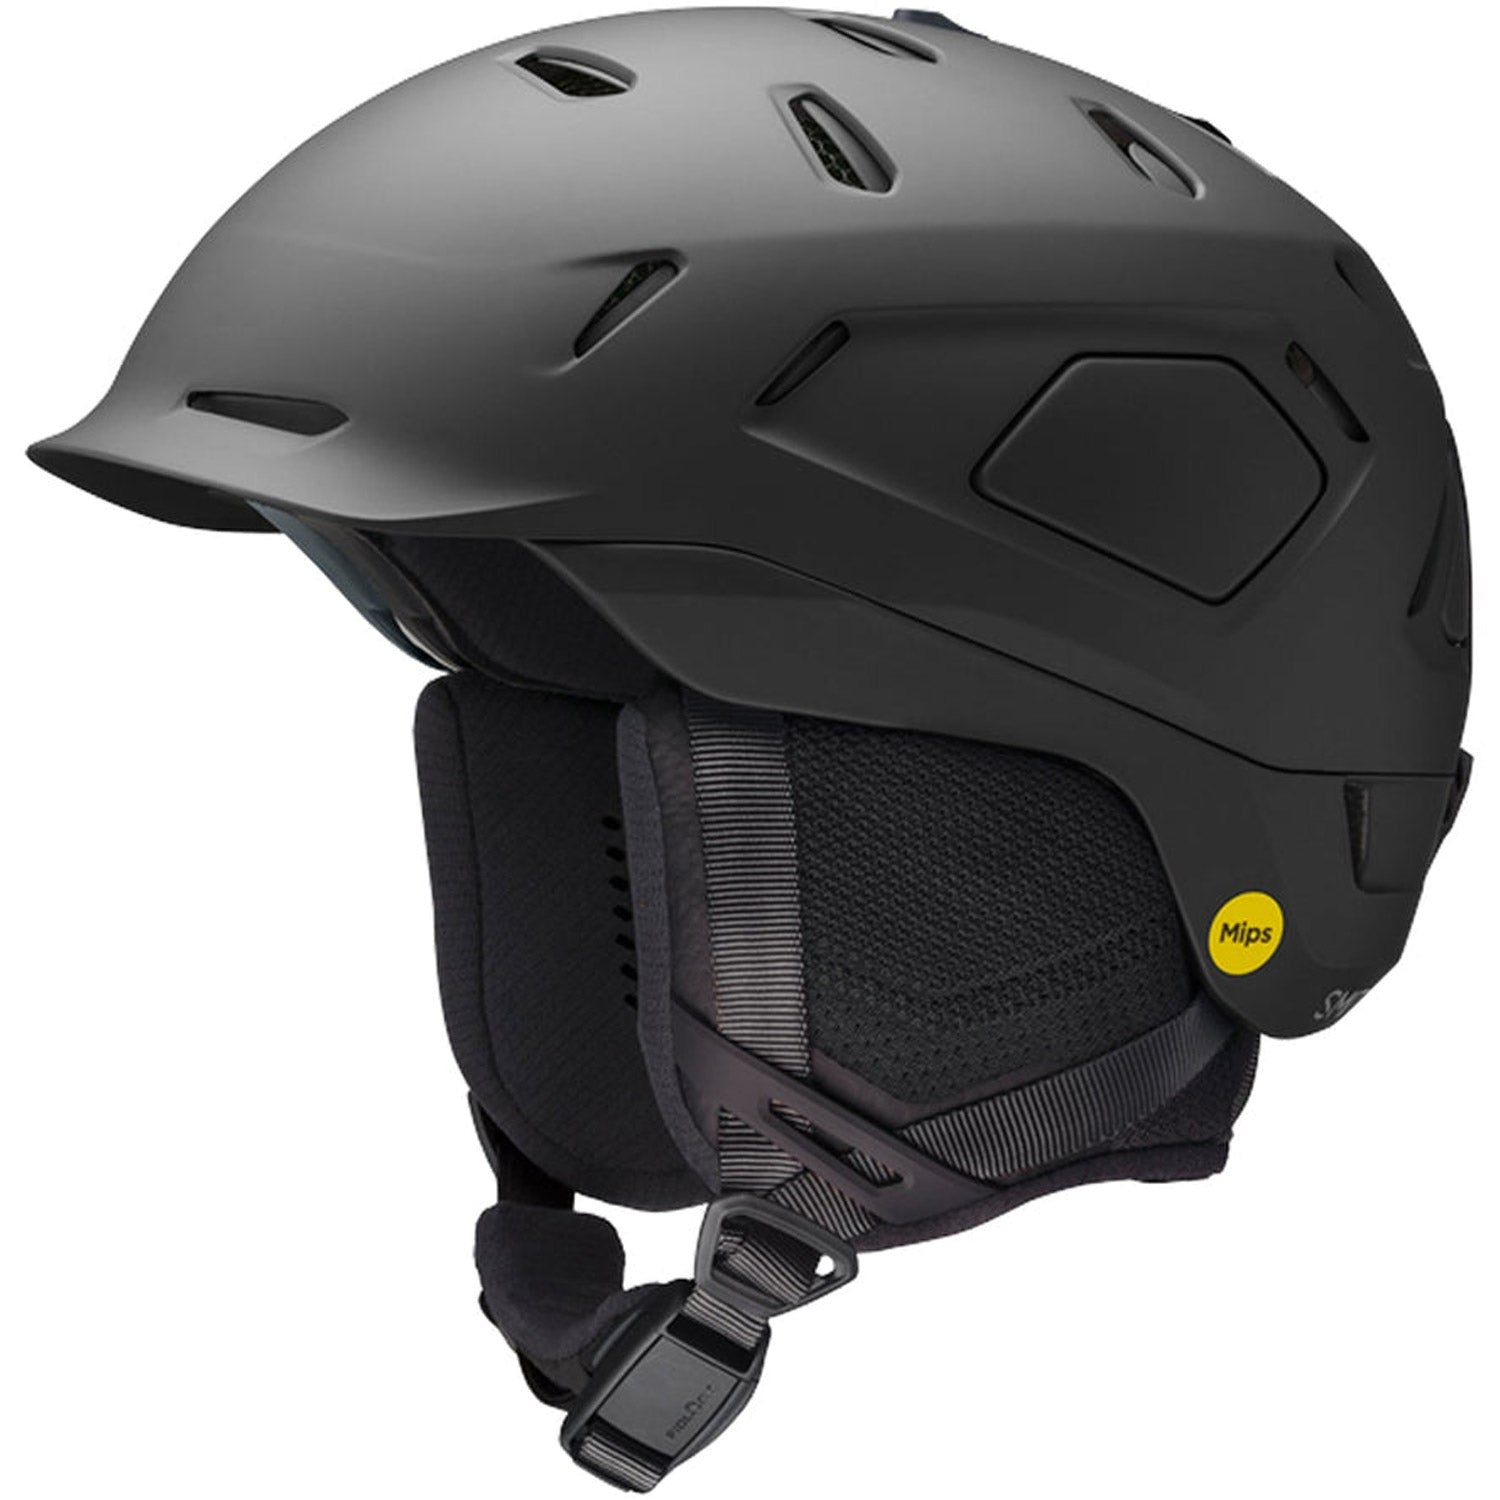 Nexus MIPS Round Contour Fit Snow Helmet